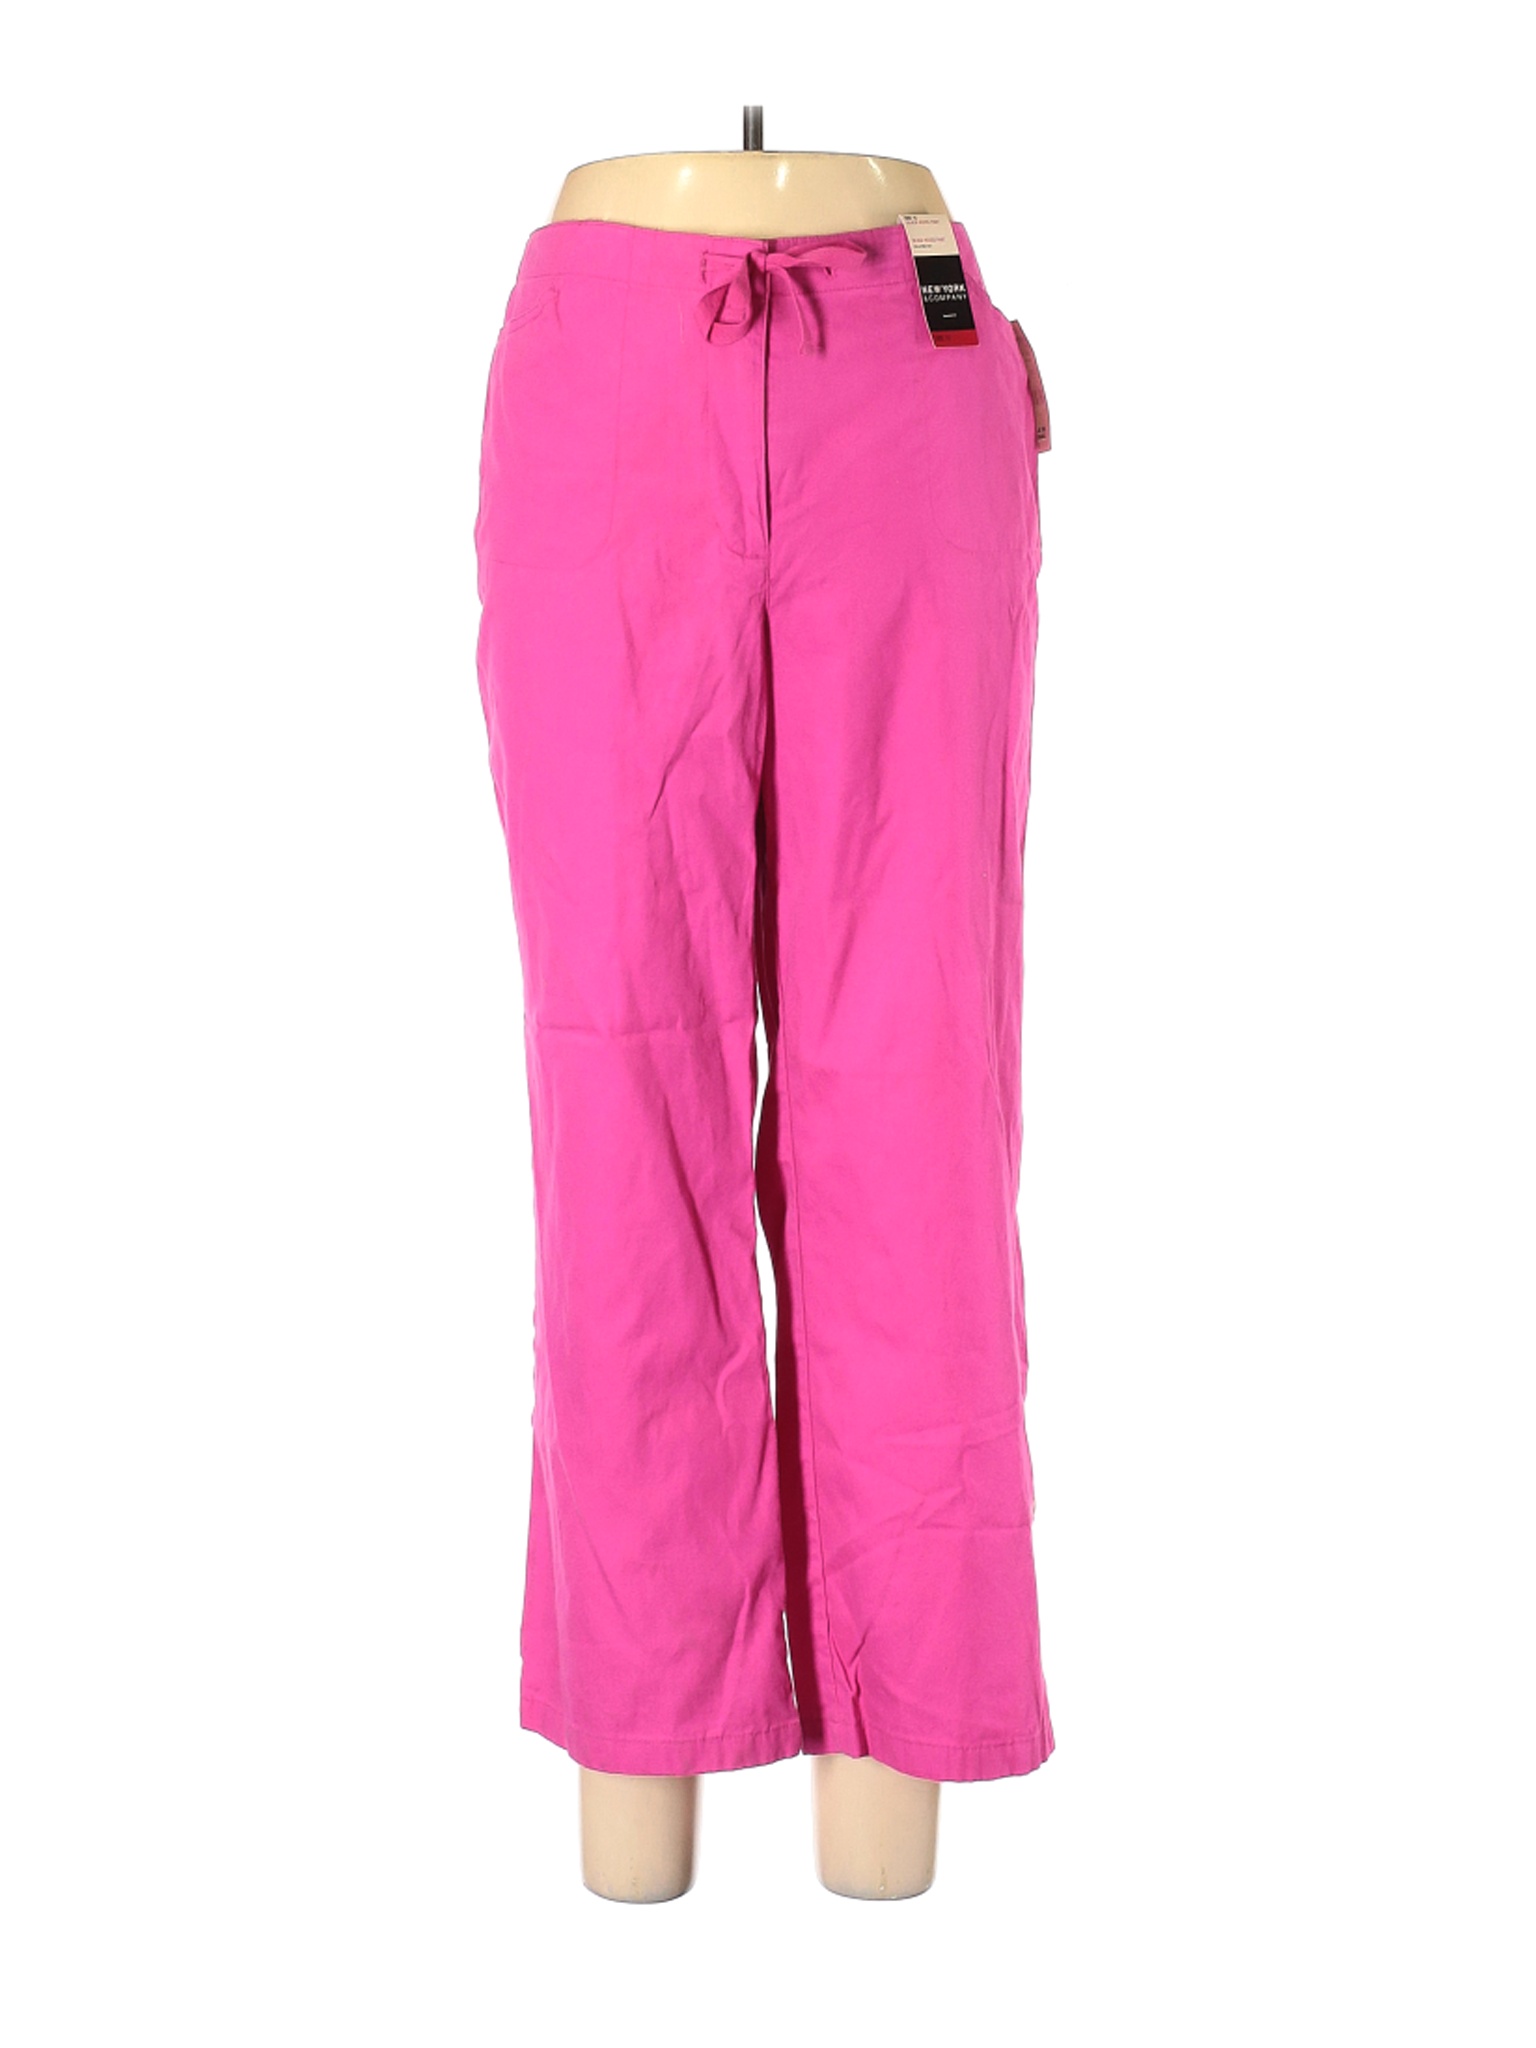 NWT New York & Company Women Pink Dress Pants 12 | eBay